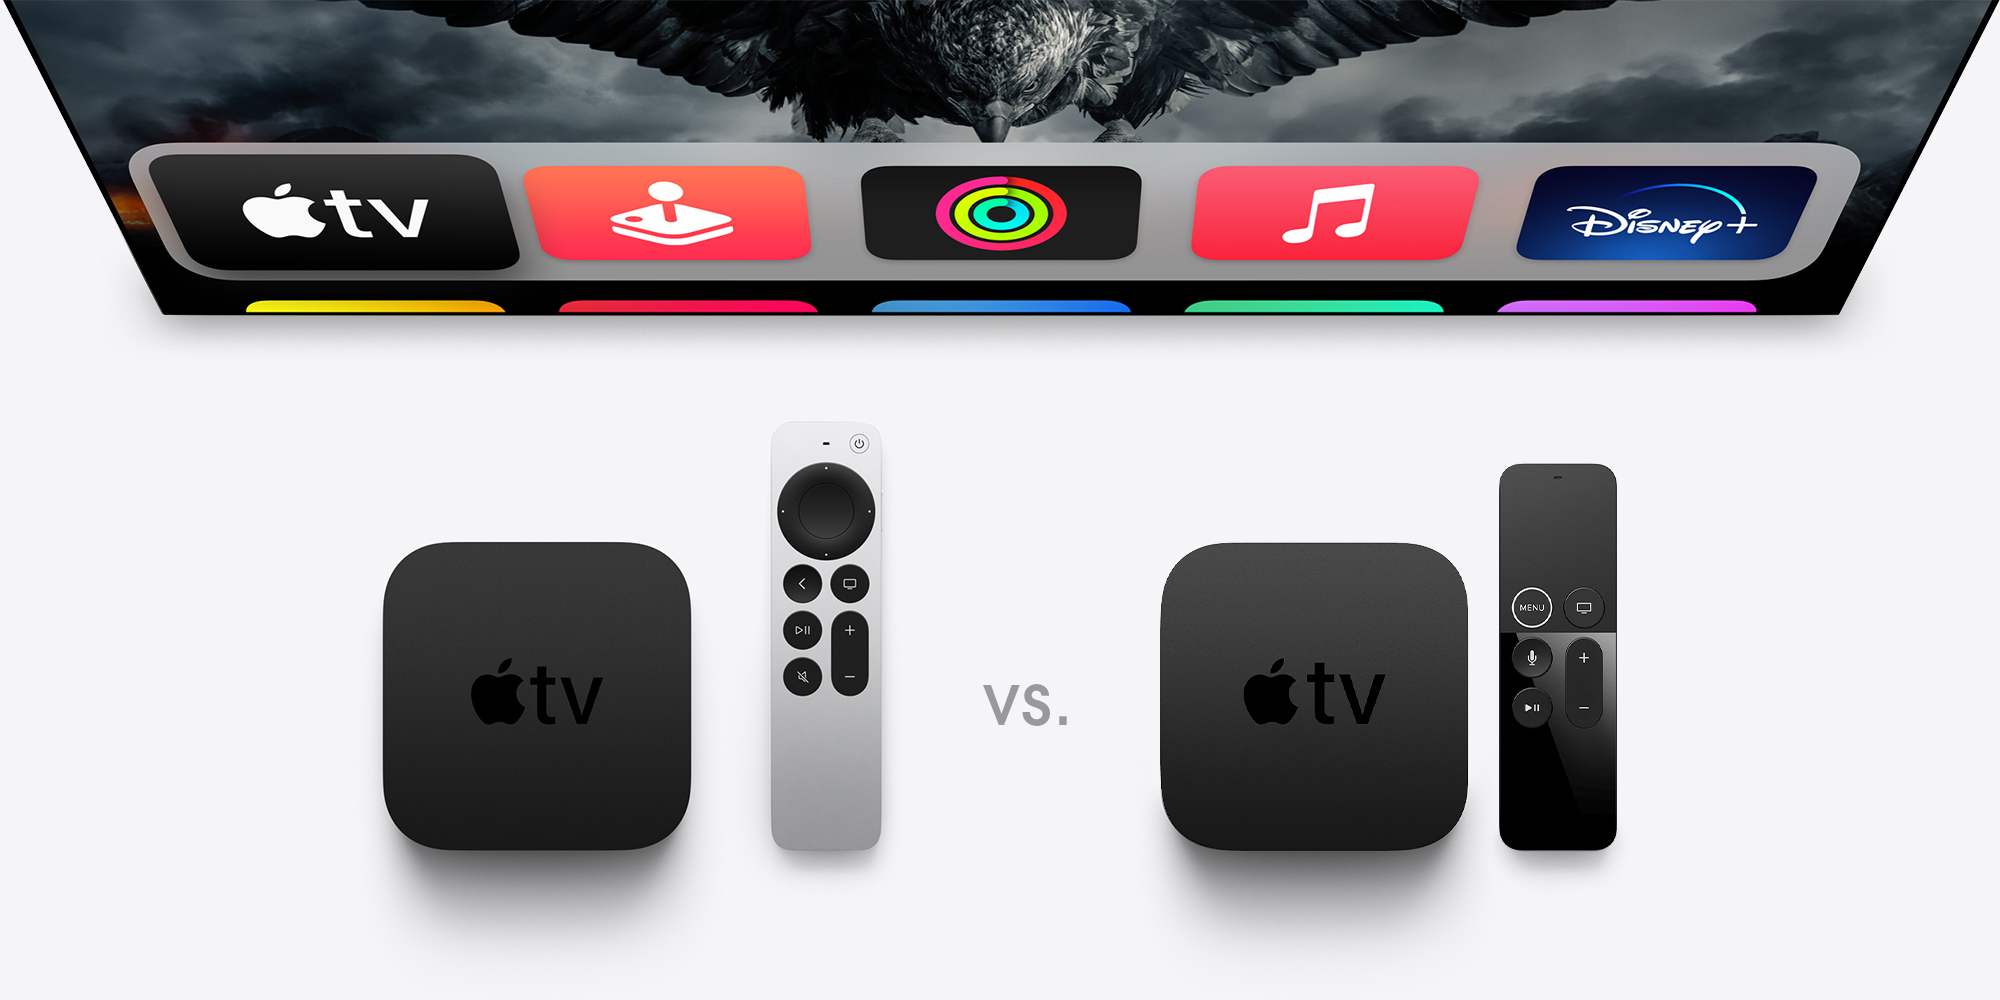 Havbrasme opnåelige Forekomme New Apple TV 4K vs old Apple TV 4K: Specs, features, price - 9to5Mac